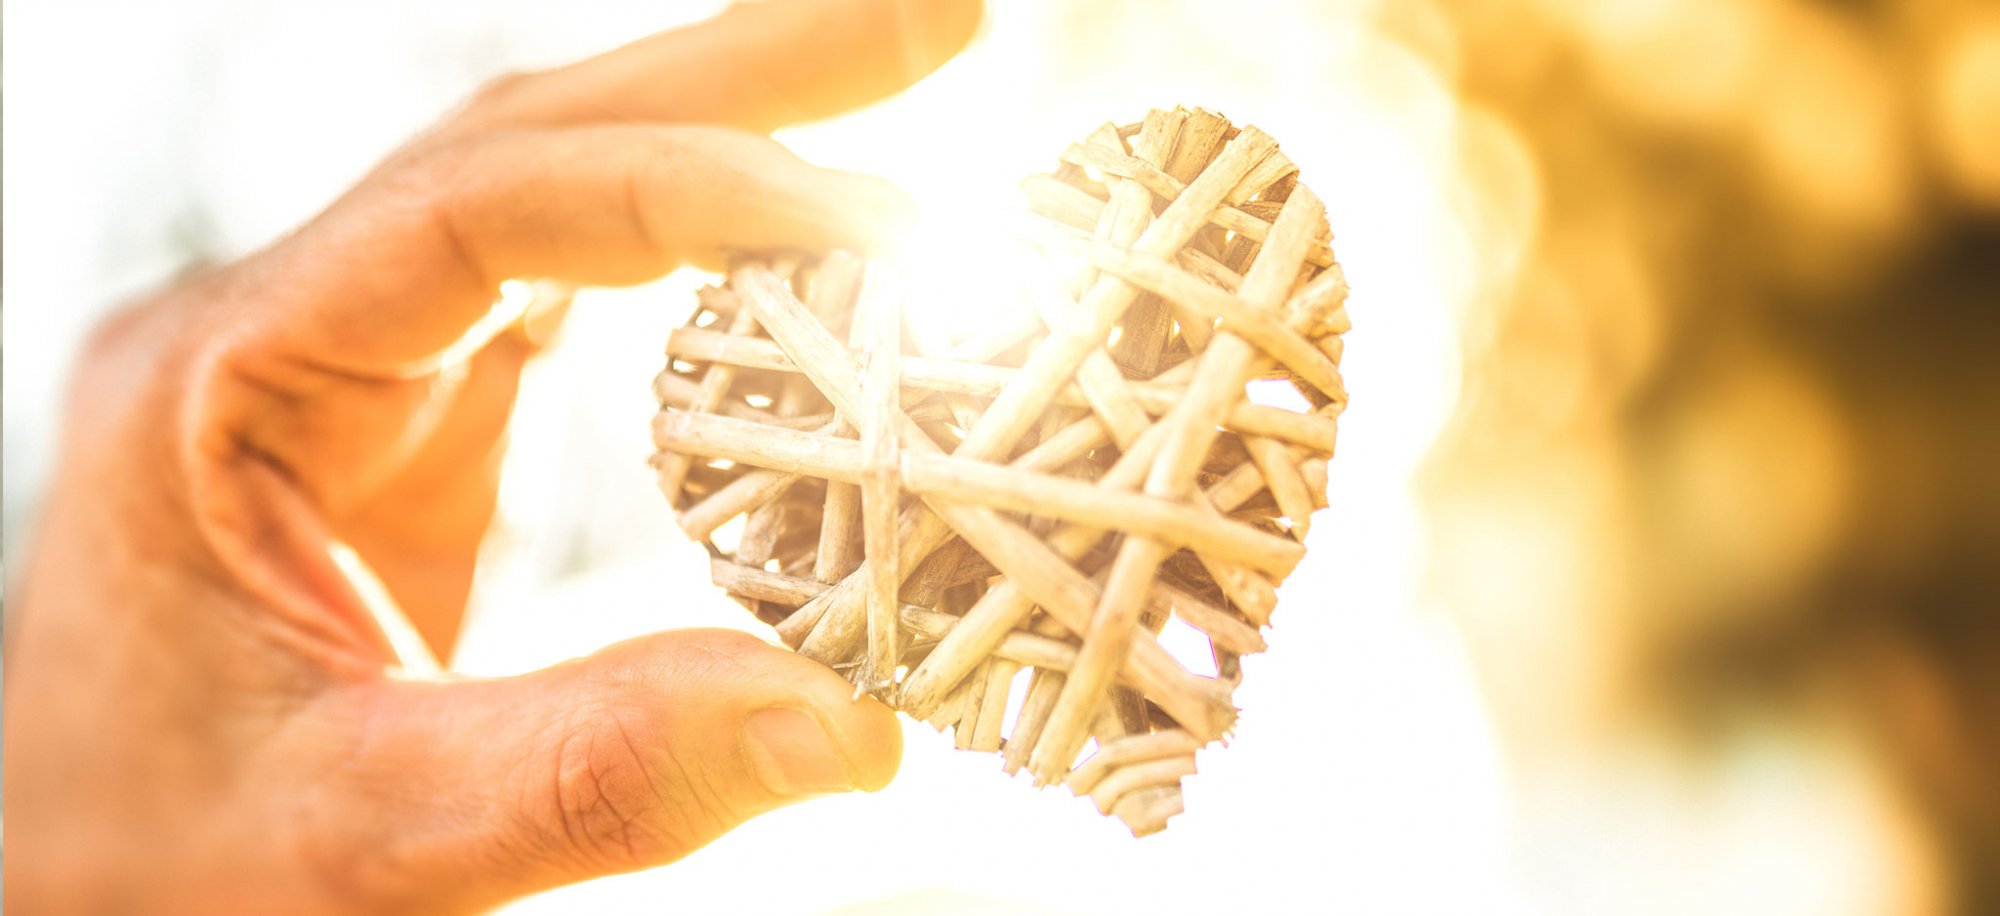 A hand holds a wooden woven heart